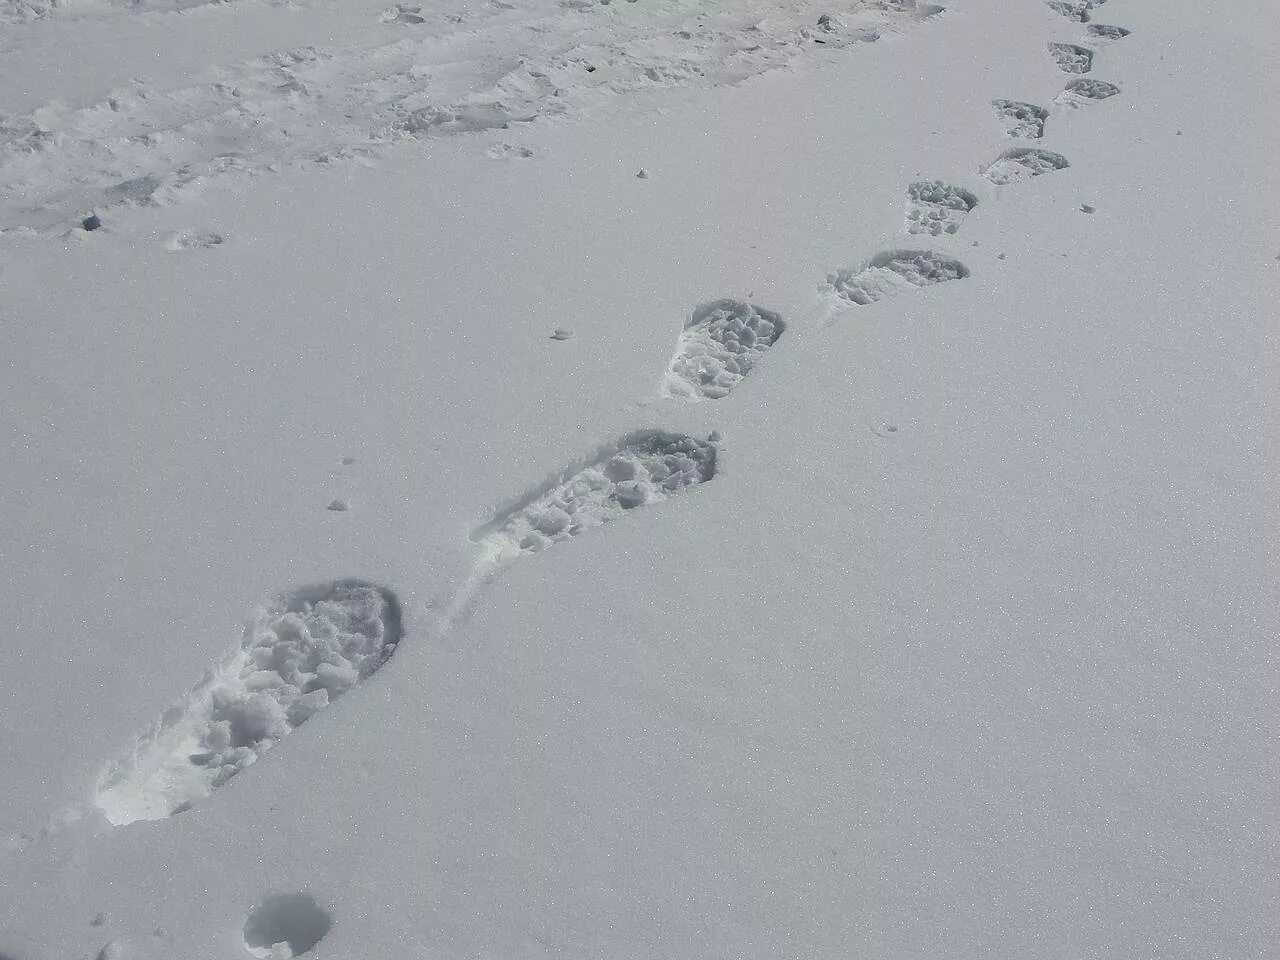 Там следы. Дорожка следов. Дорожка следов обуви. Дорожка следов на снегу. Следы обуви на снегу криминалистика.